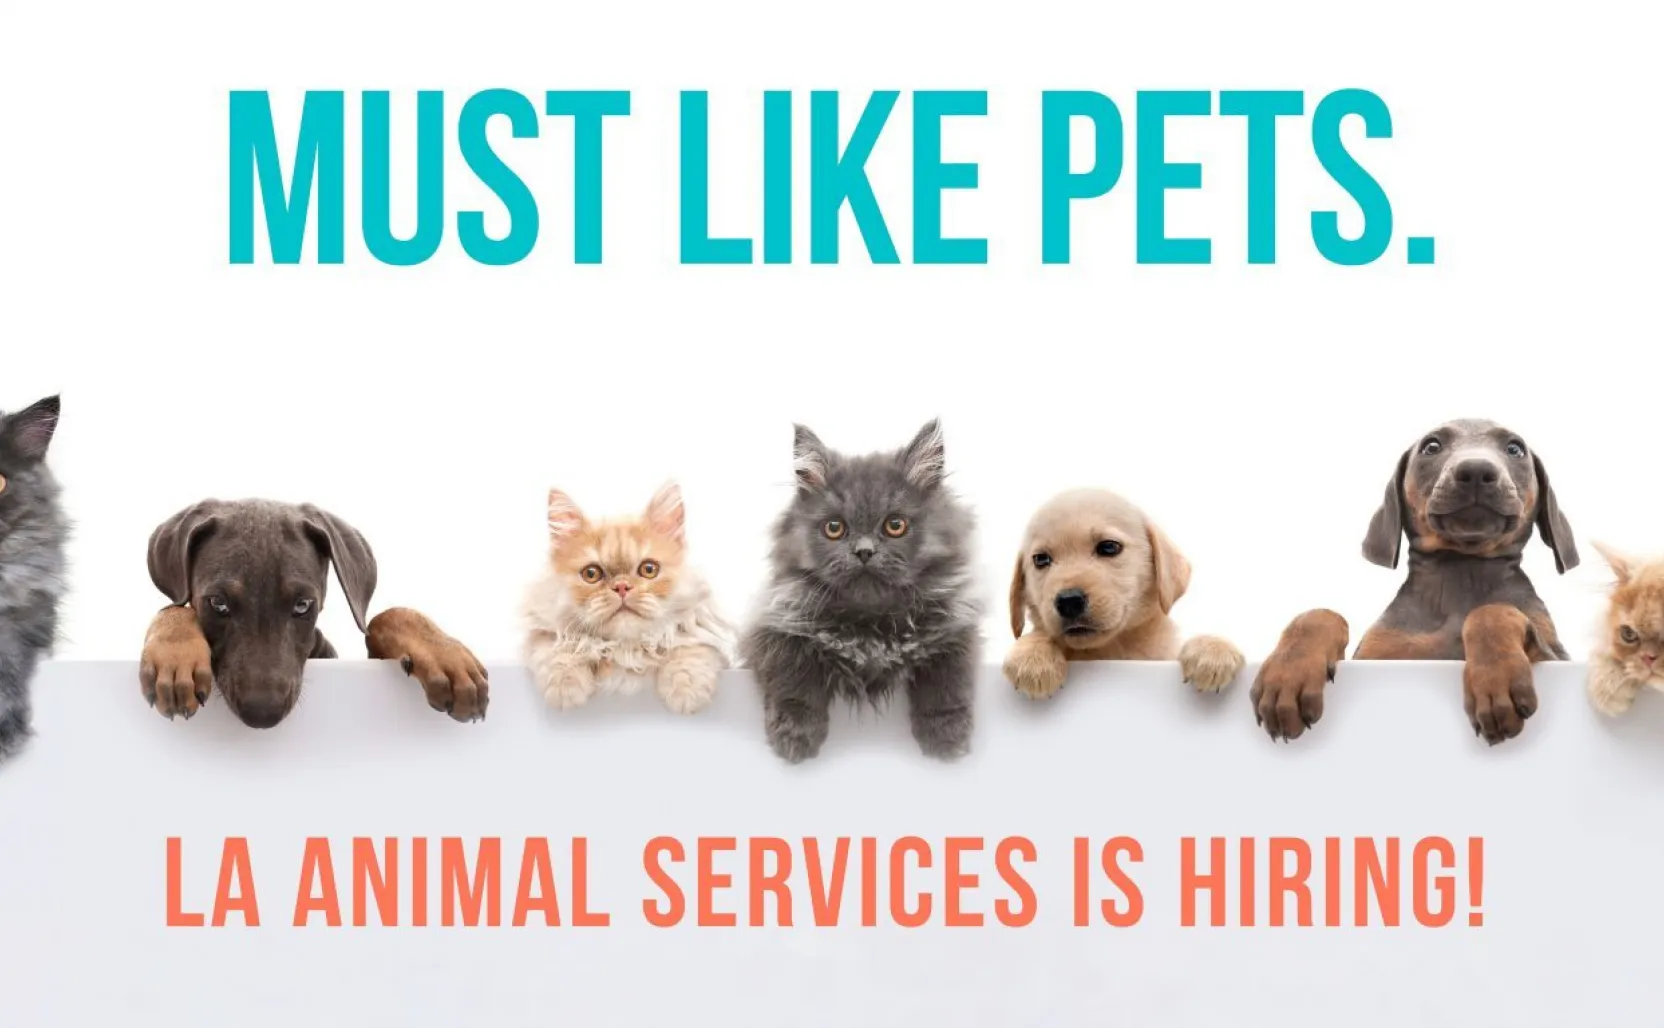 LA Animal Services is Hiring!